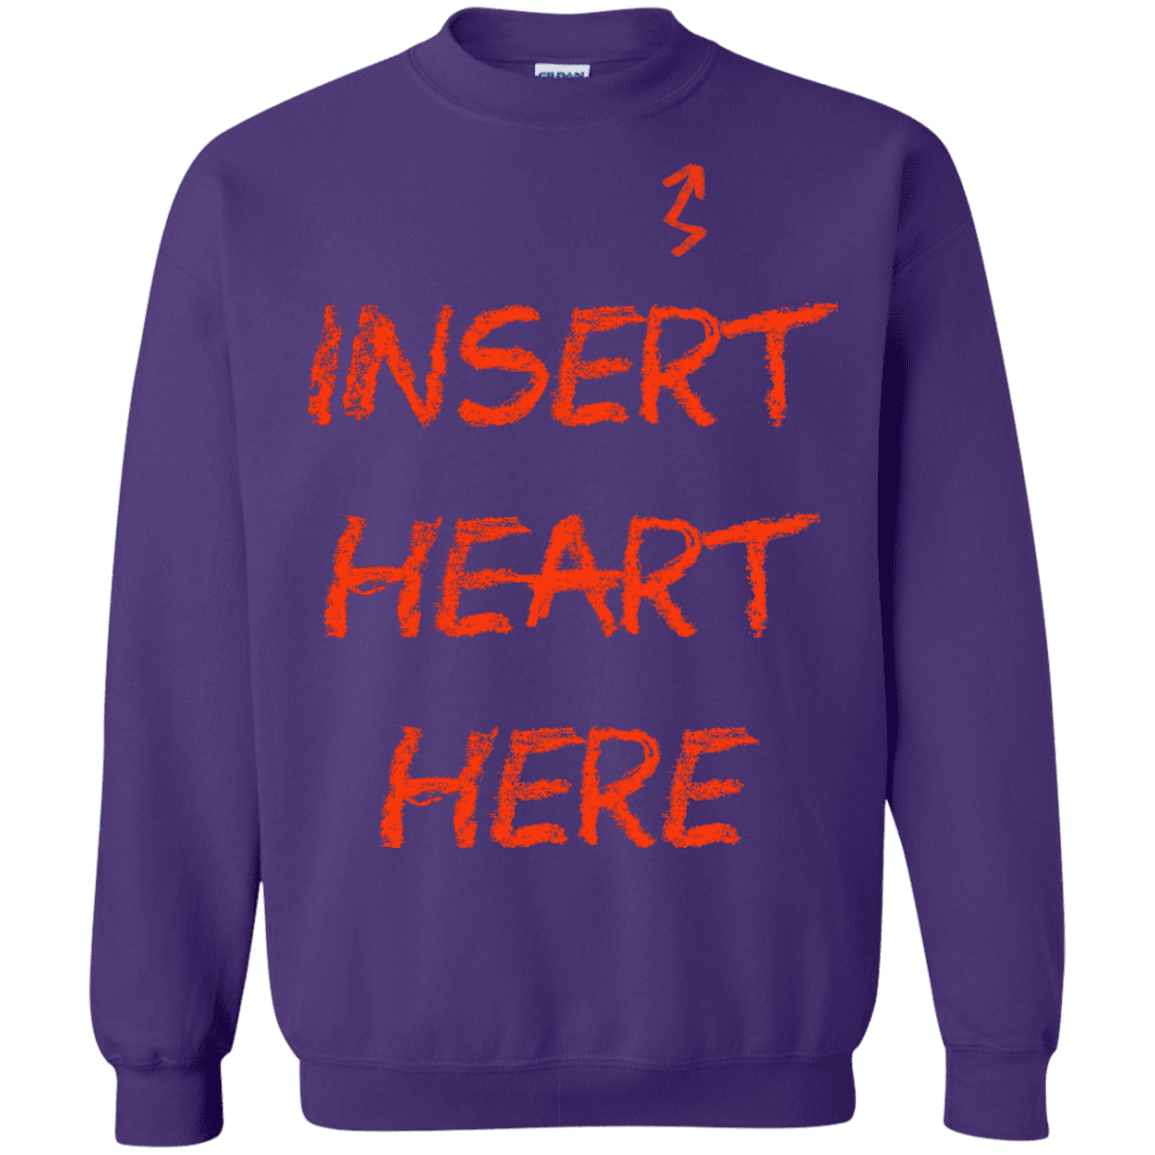 Sweatshirts Purple / S Insert Heart Here Crewneck Sweatshirt